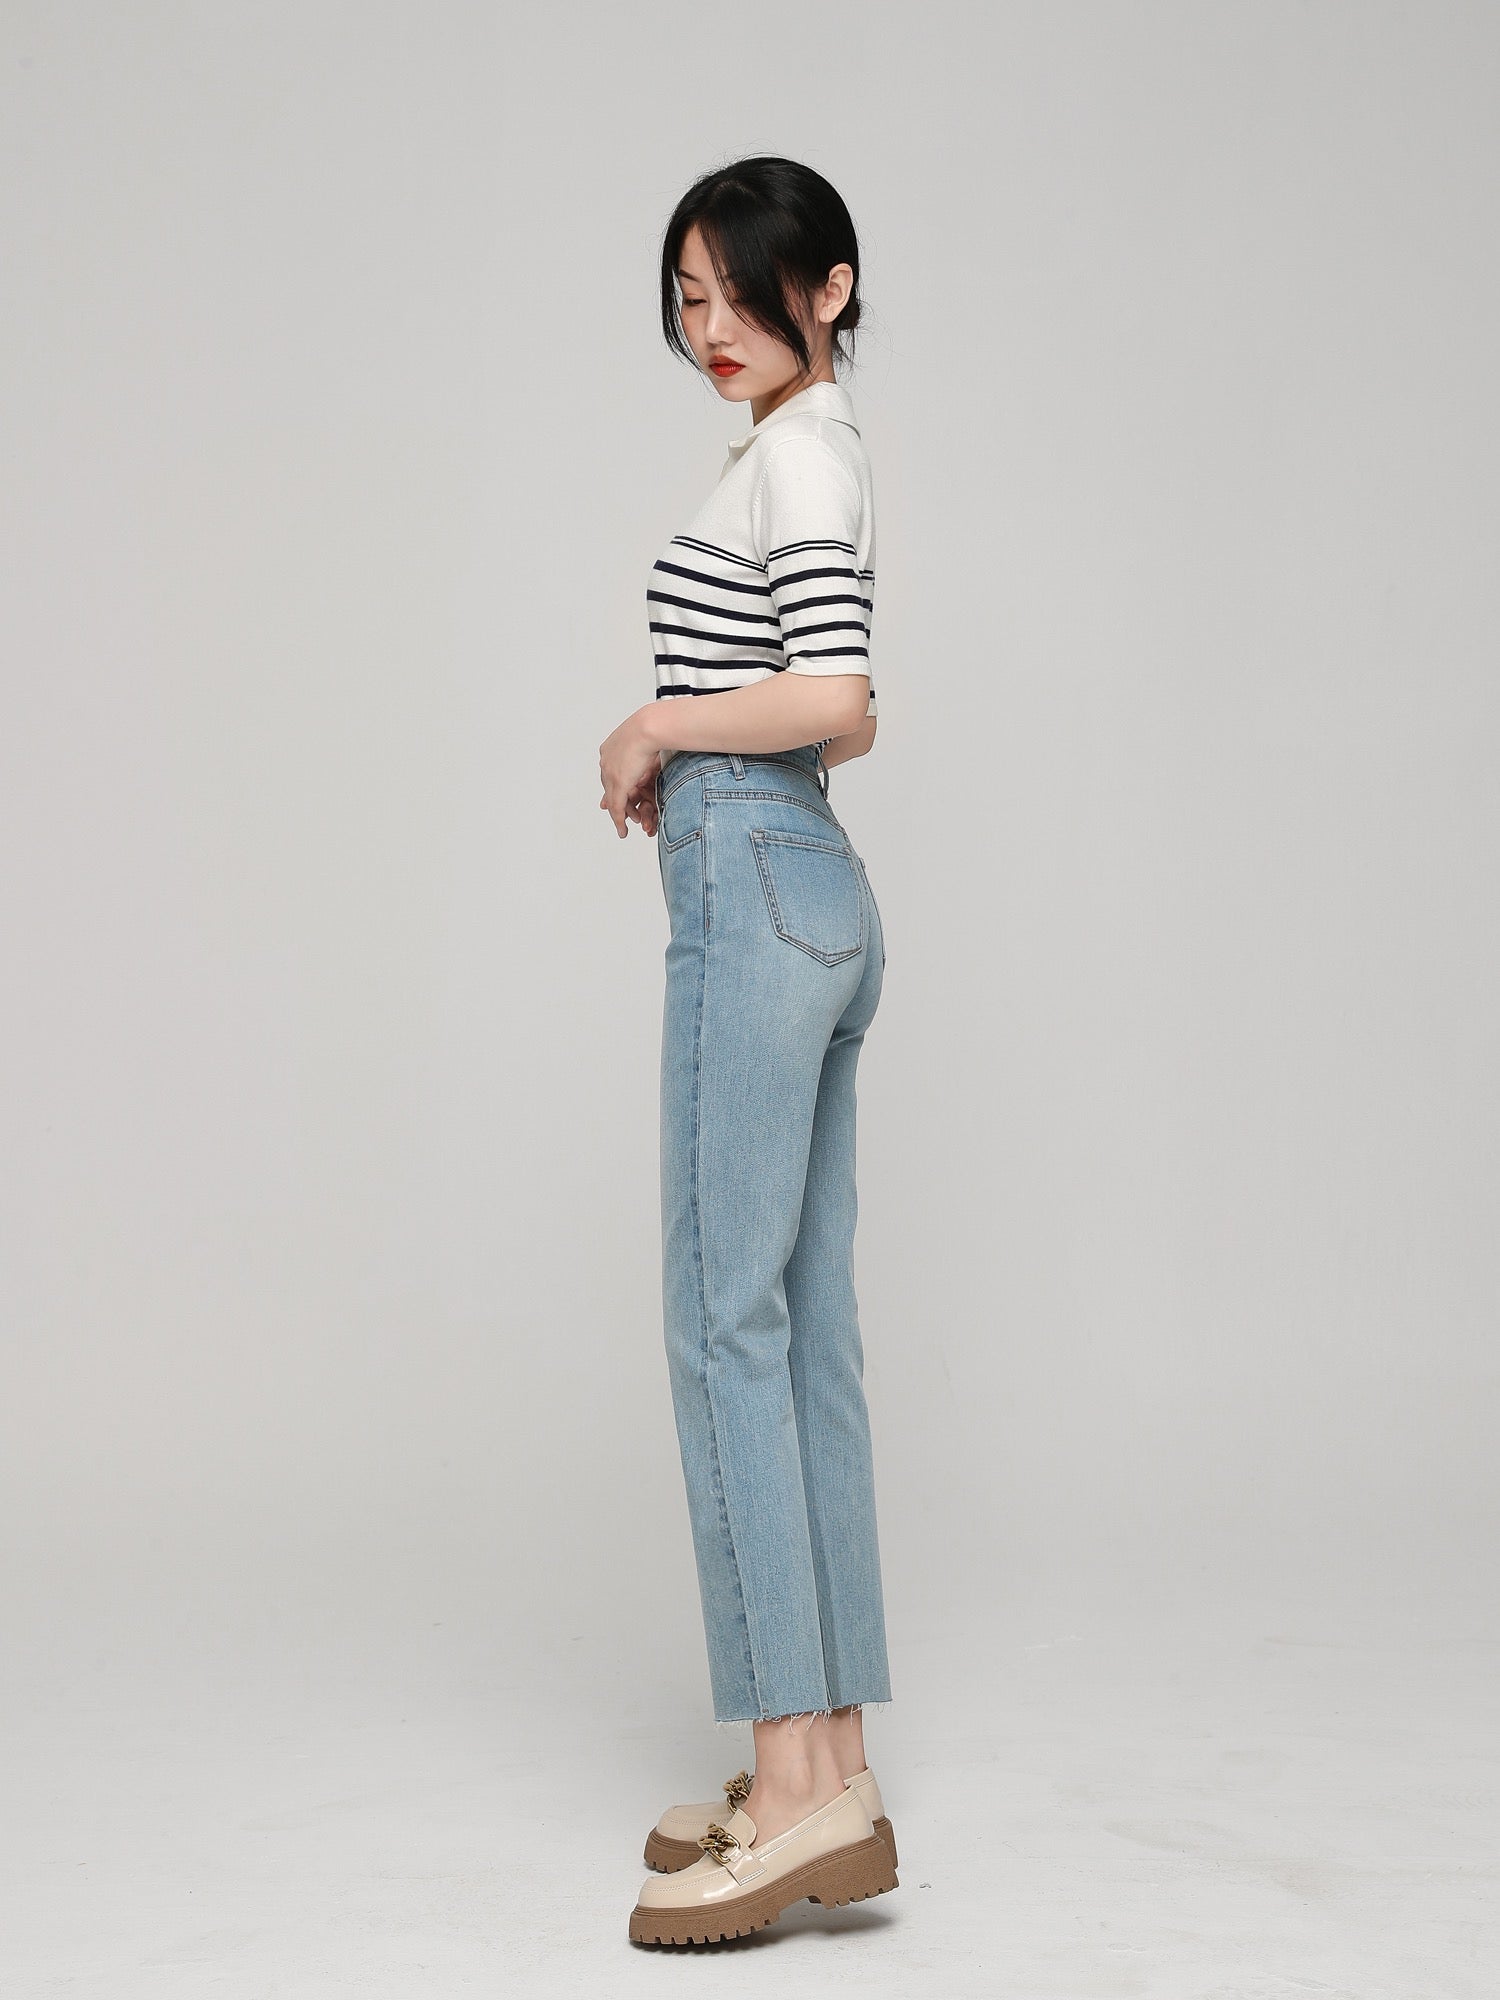 Women Denim Jeans Pants Slim Skinny High Waist Spring Summer